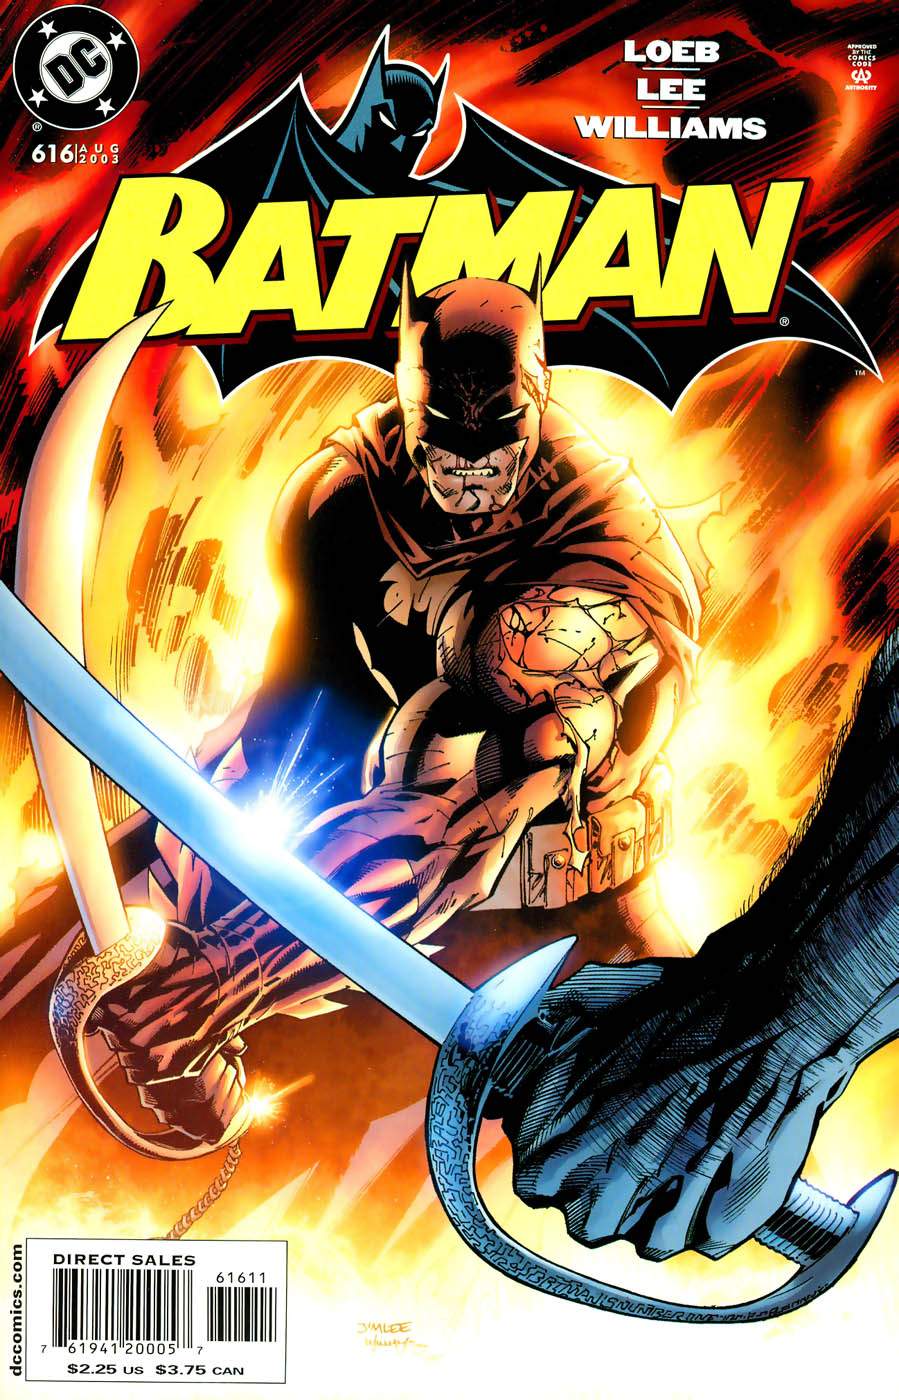 Batman Hush Issue 9 | Read Batman Hush Issue 9 comic online in high  quality. Read Full Comic online for free - Read comics online in high  quality .|